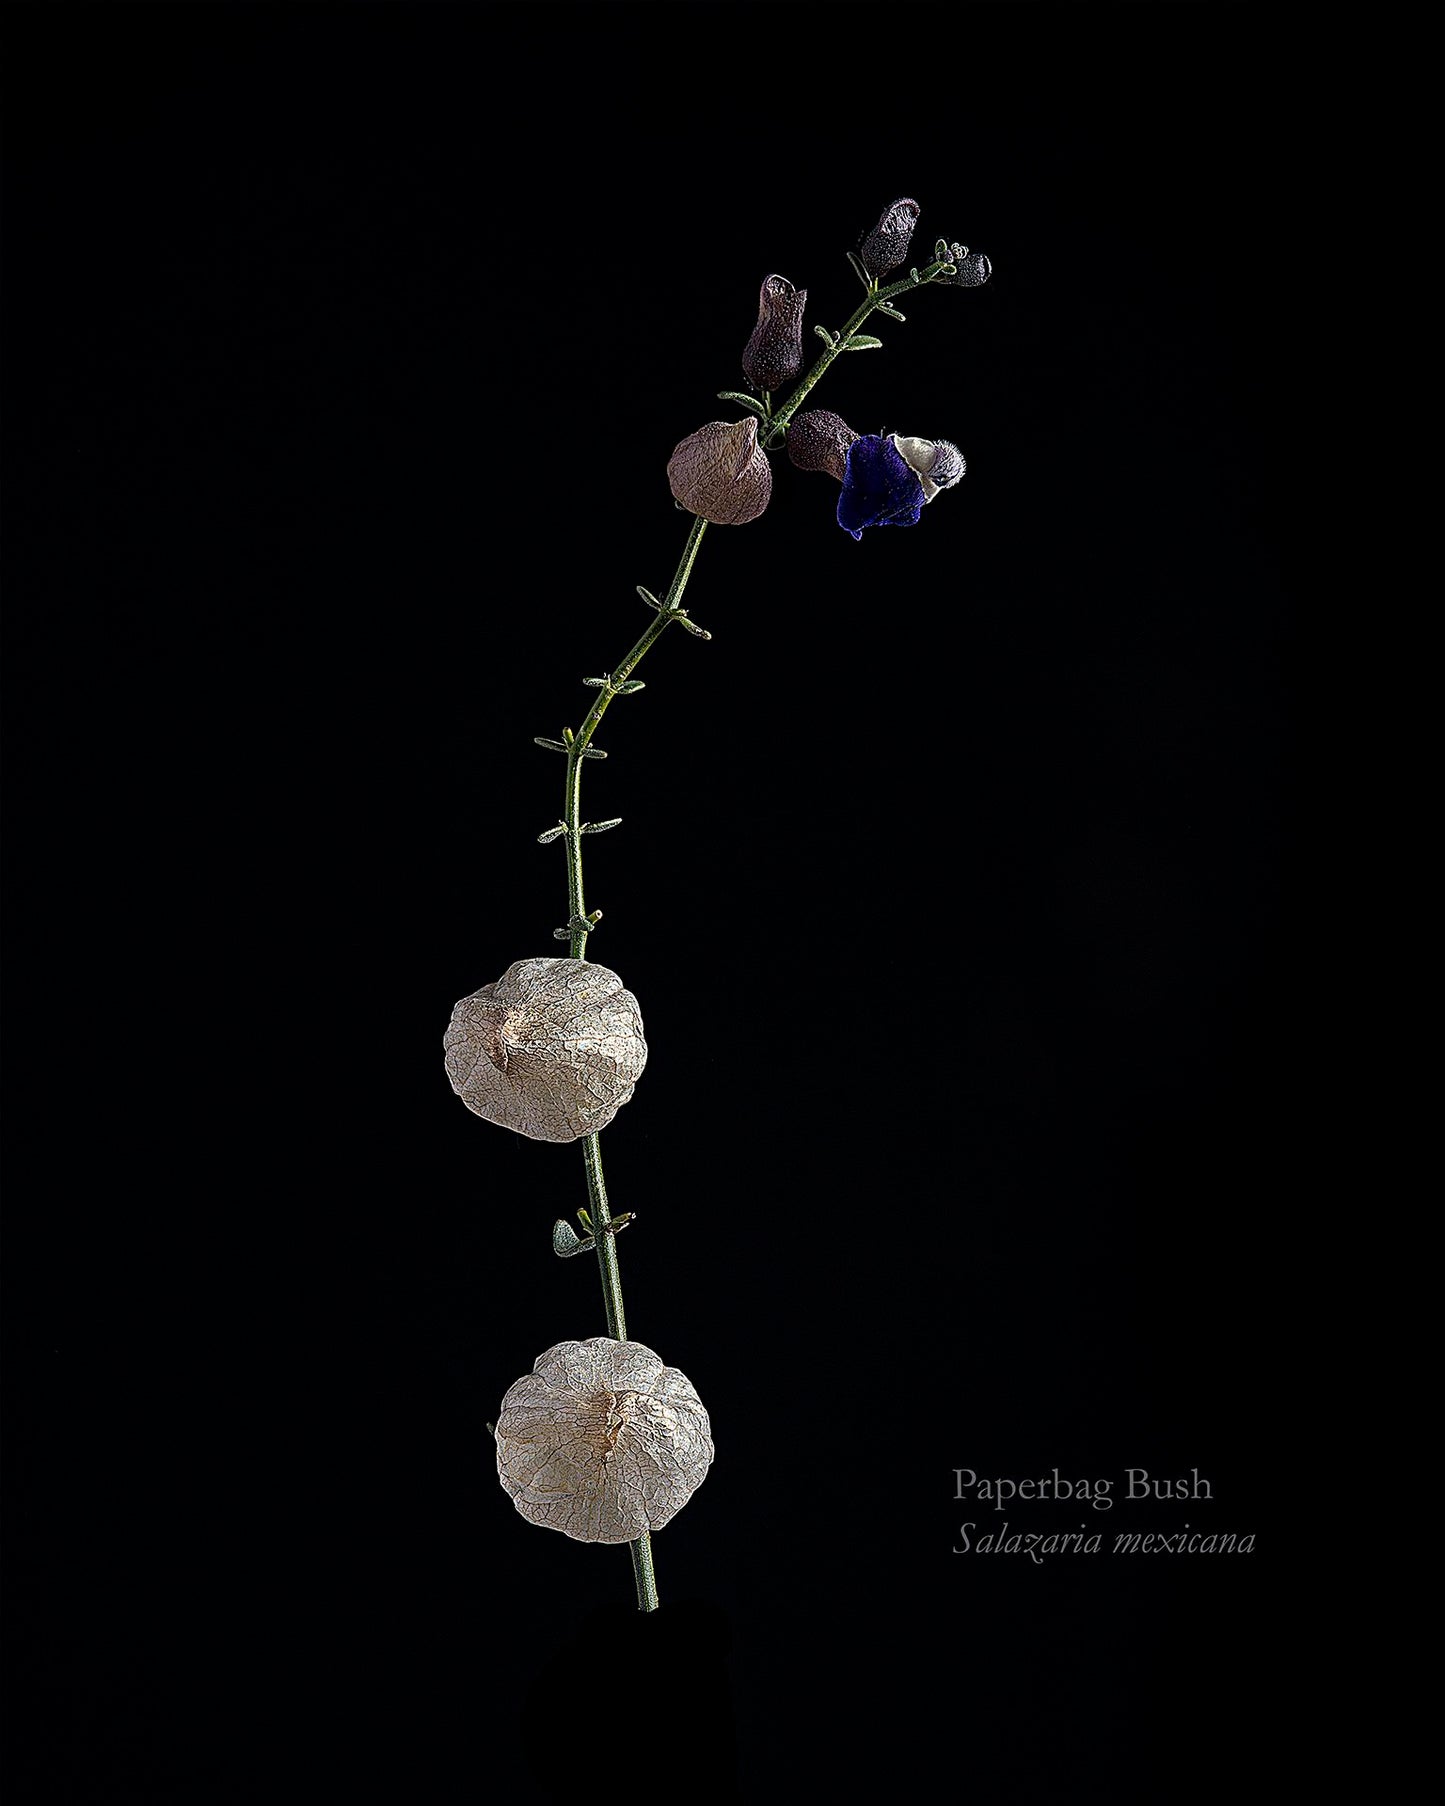 Paperbag Bush - Stem and Flower